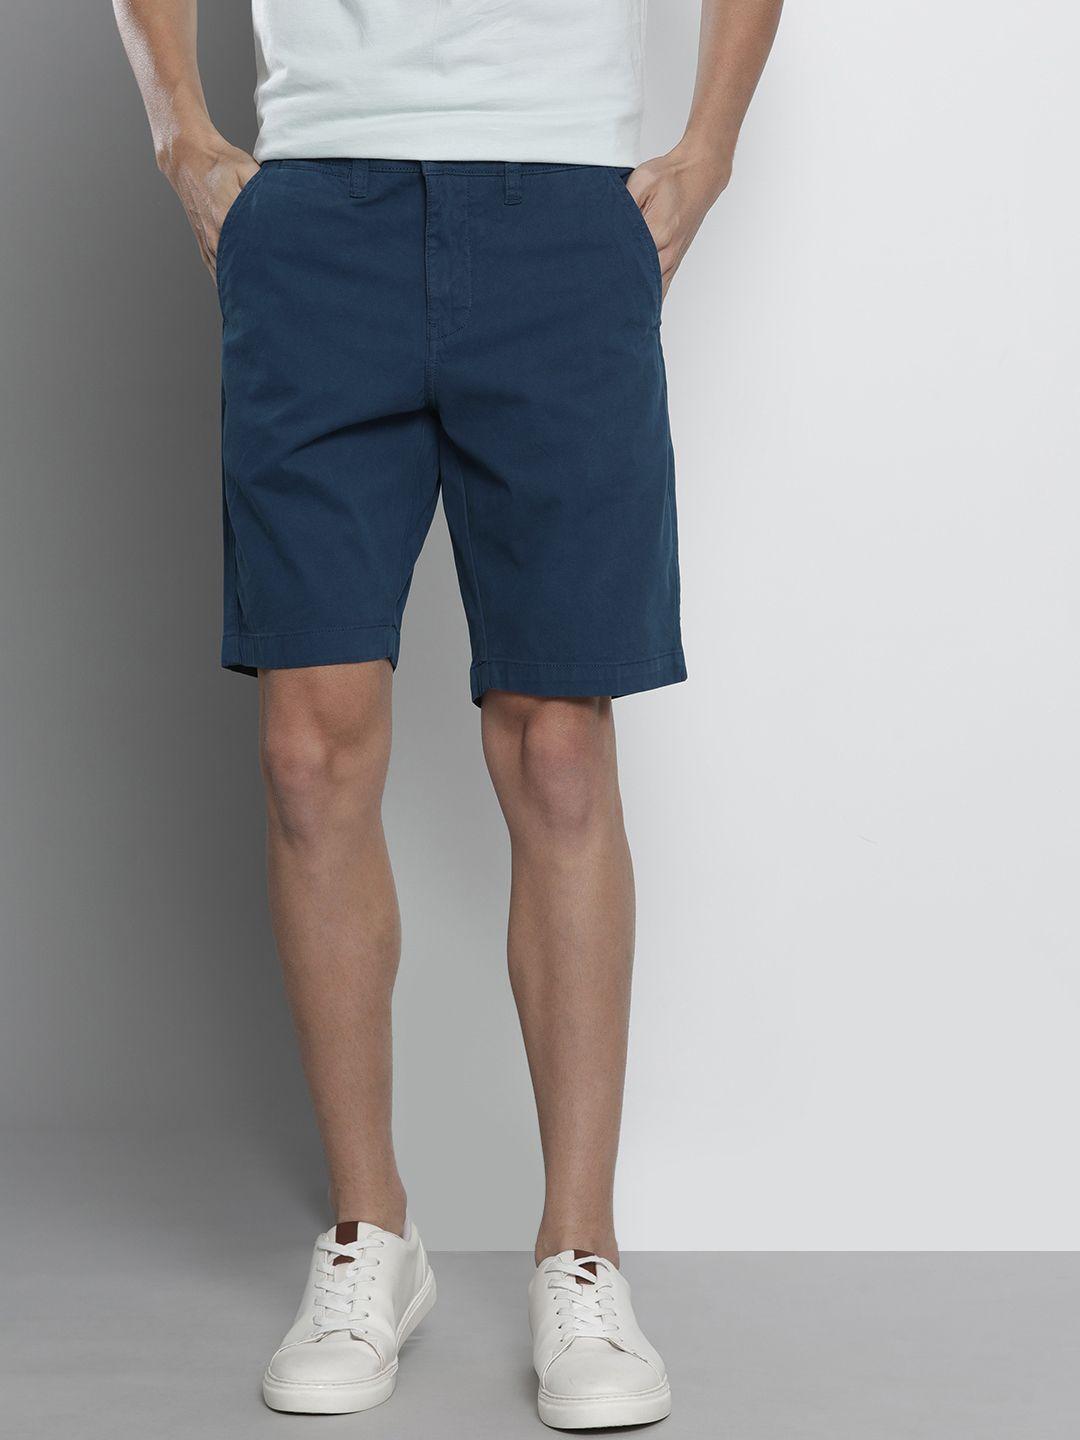 nautica men navy blue solid slim fit chino shorts